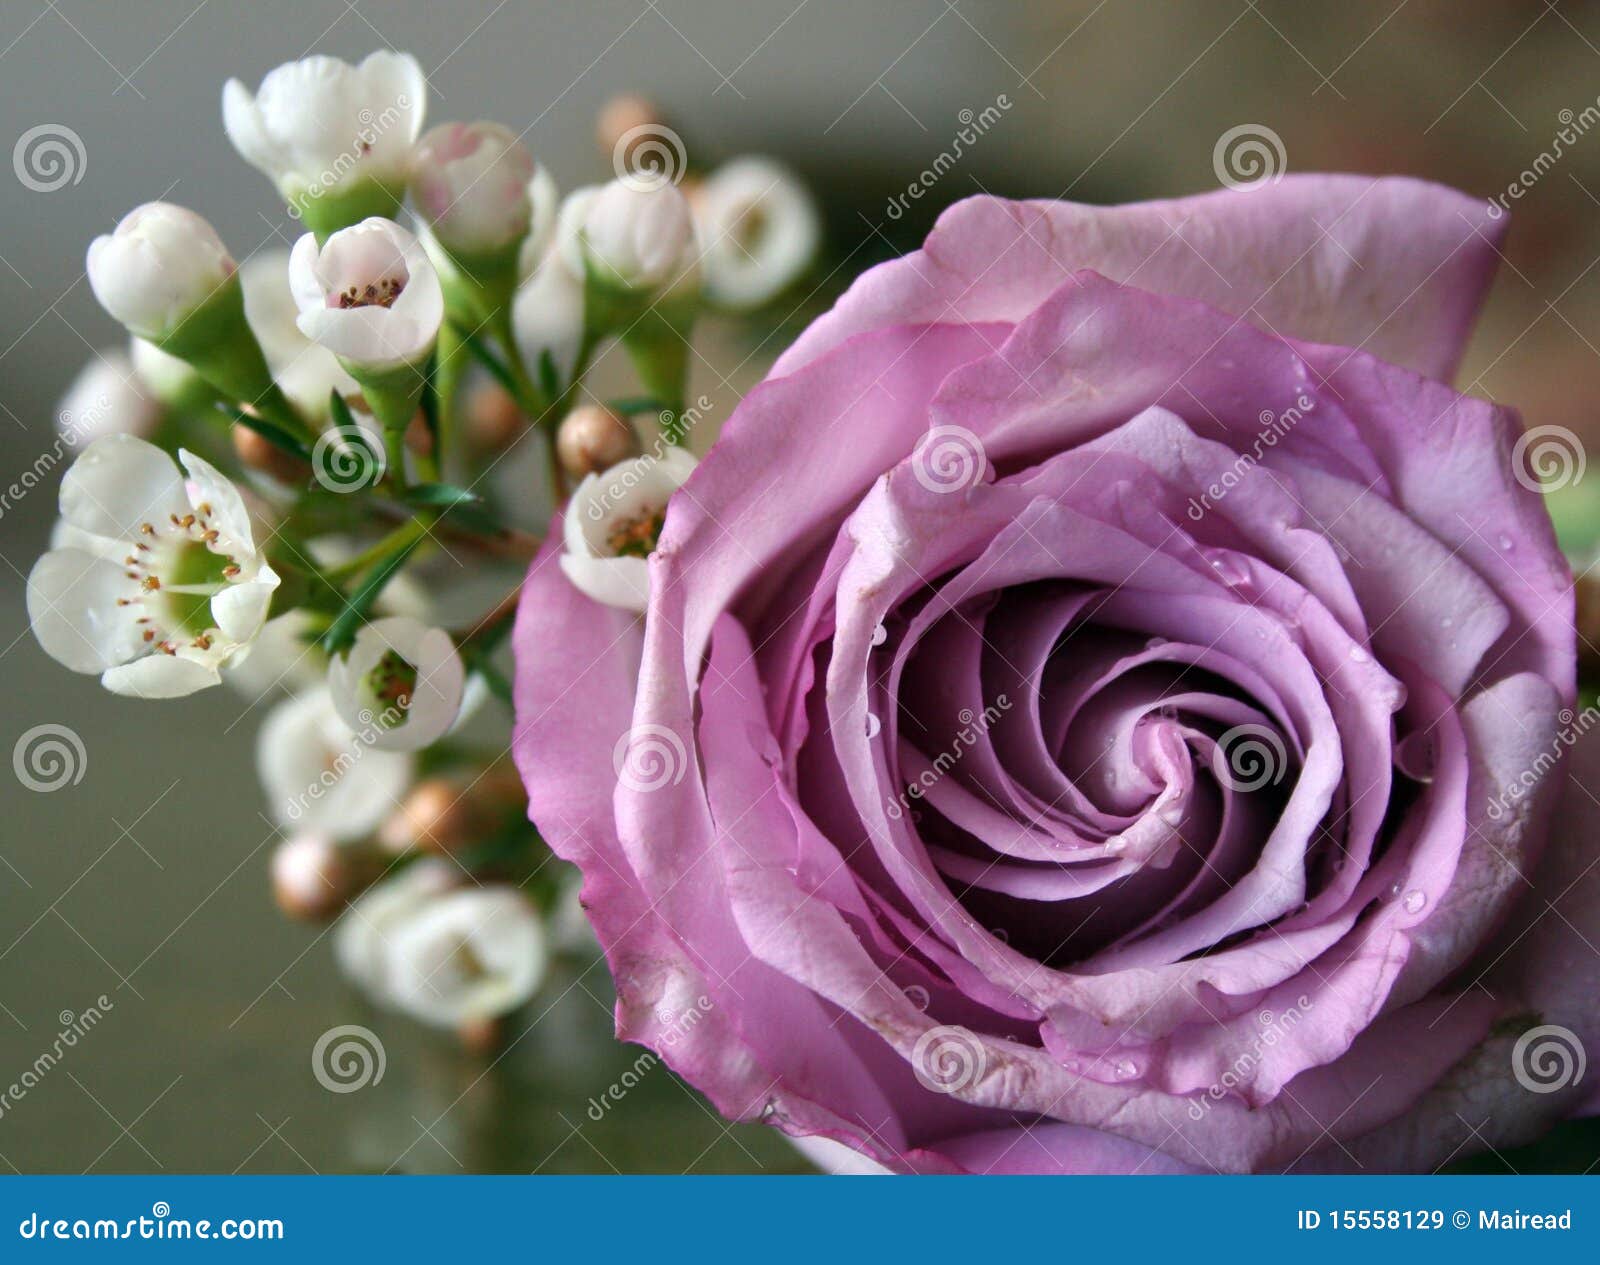 mauve rose in bloom